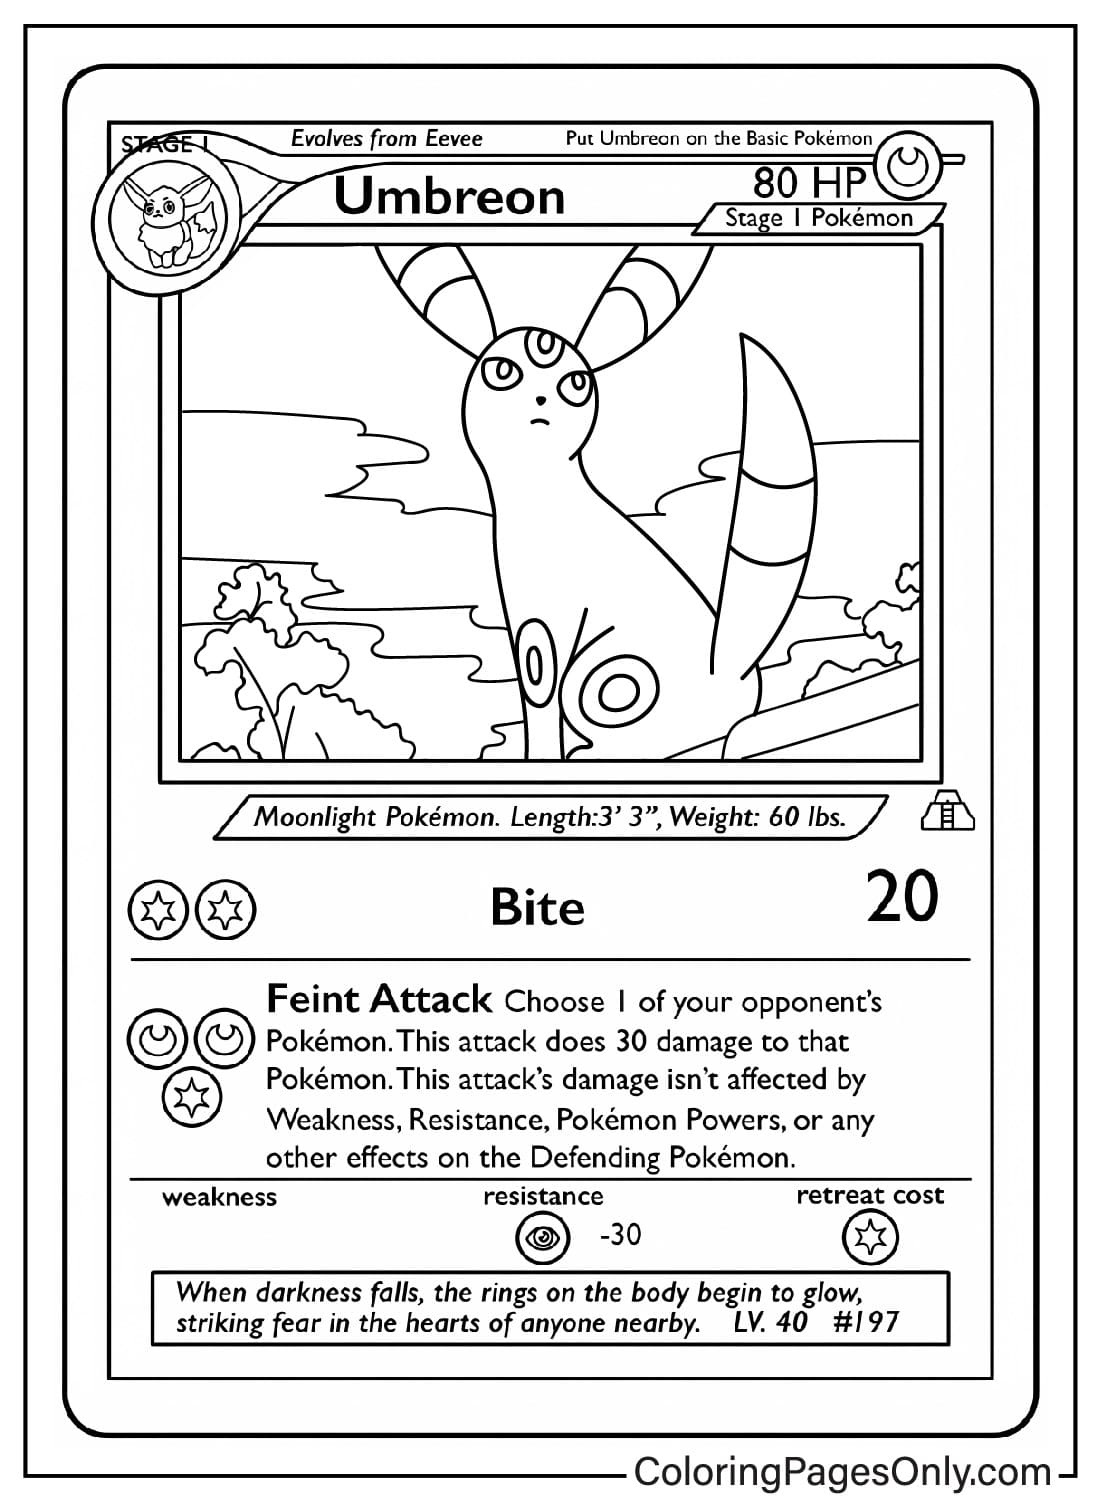 Umbreon Pokemon kaart kleurplaat van Pokemon Card